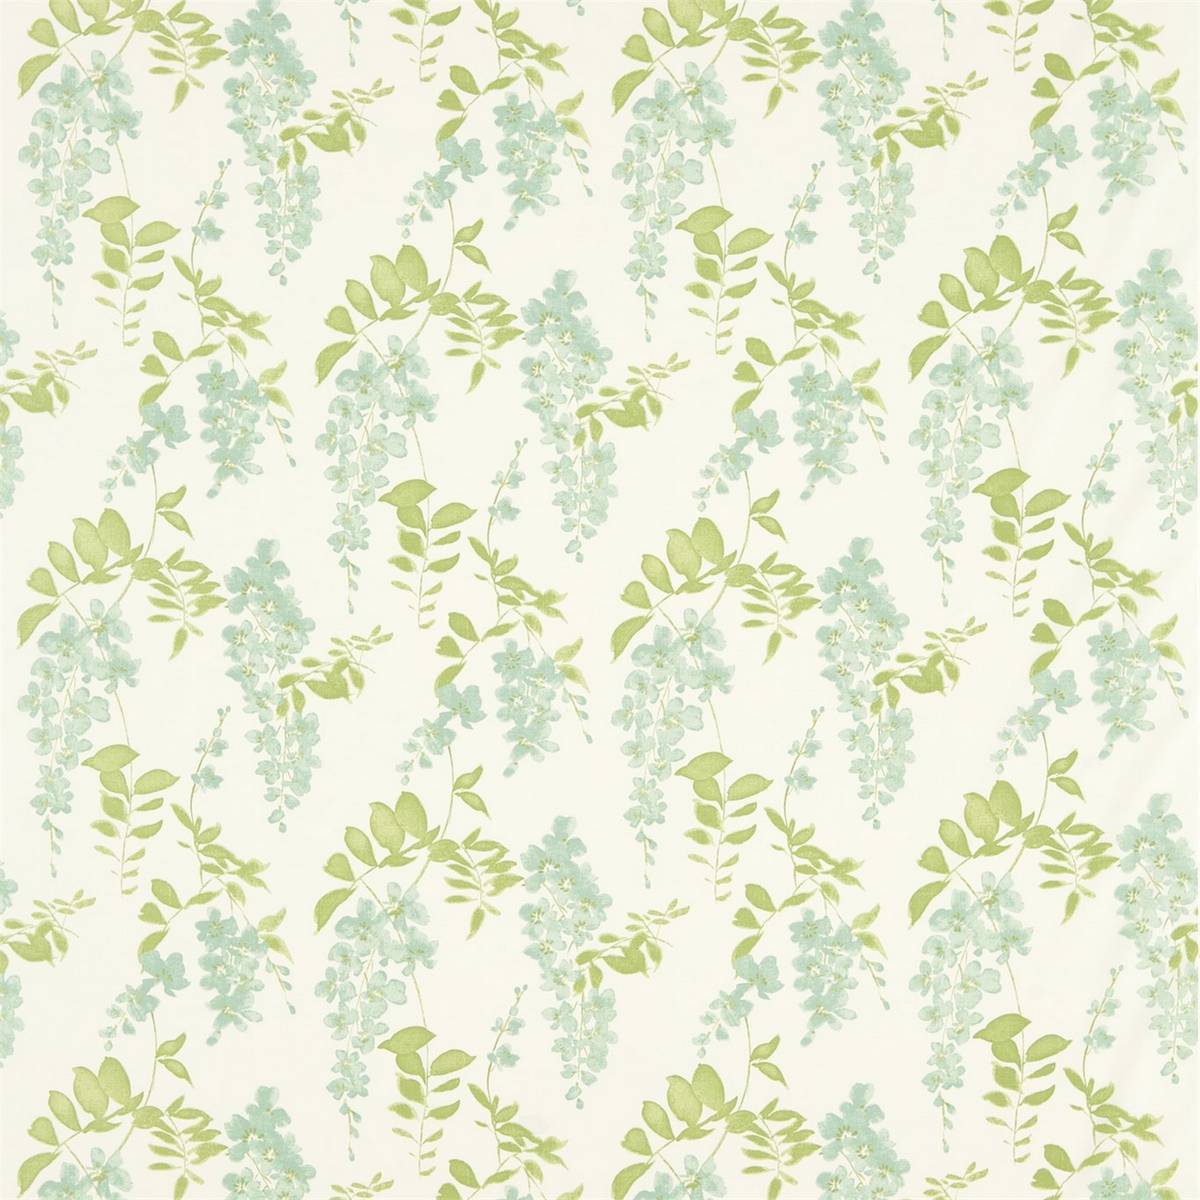 Wisteria Blossom Aqua/Lime Fabric by Sanderson